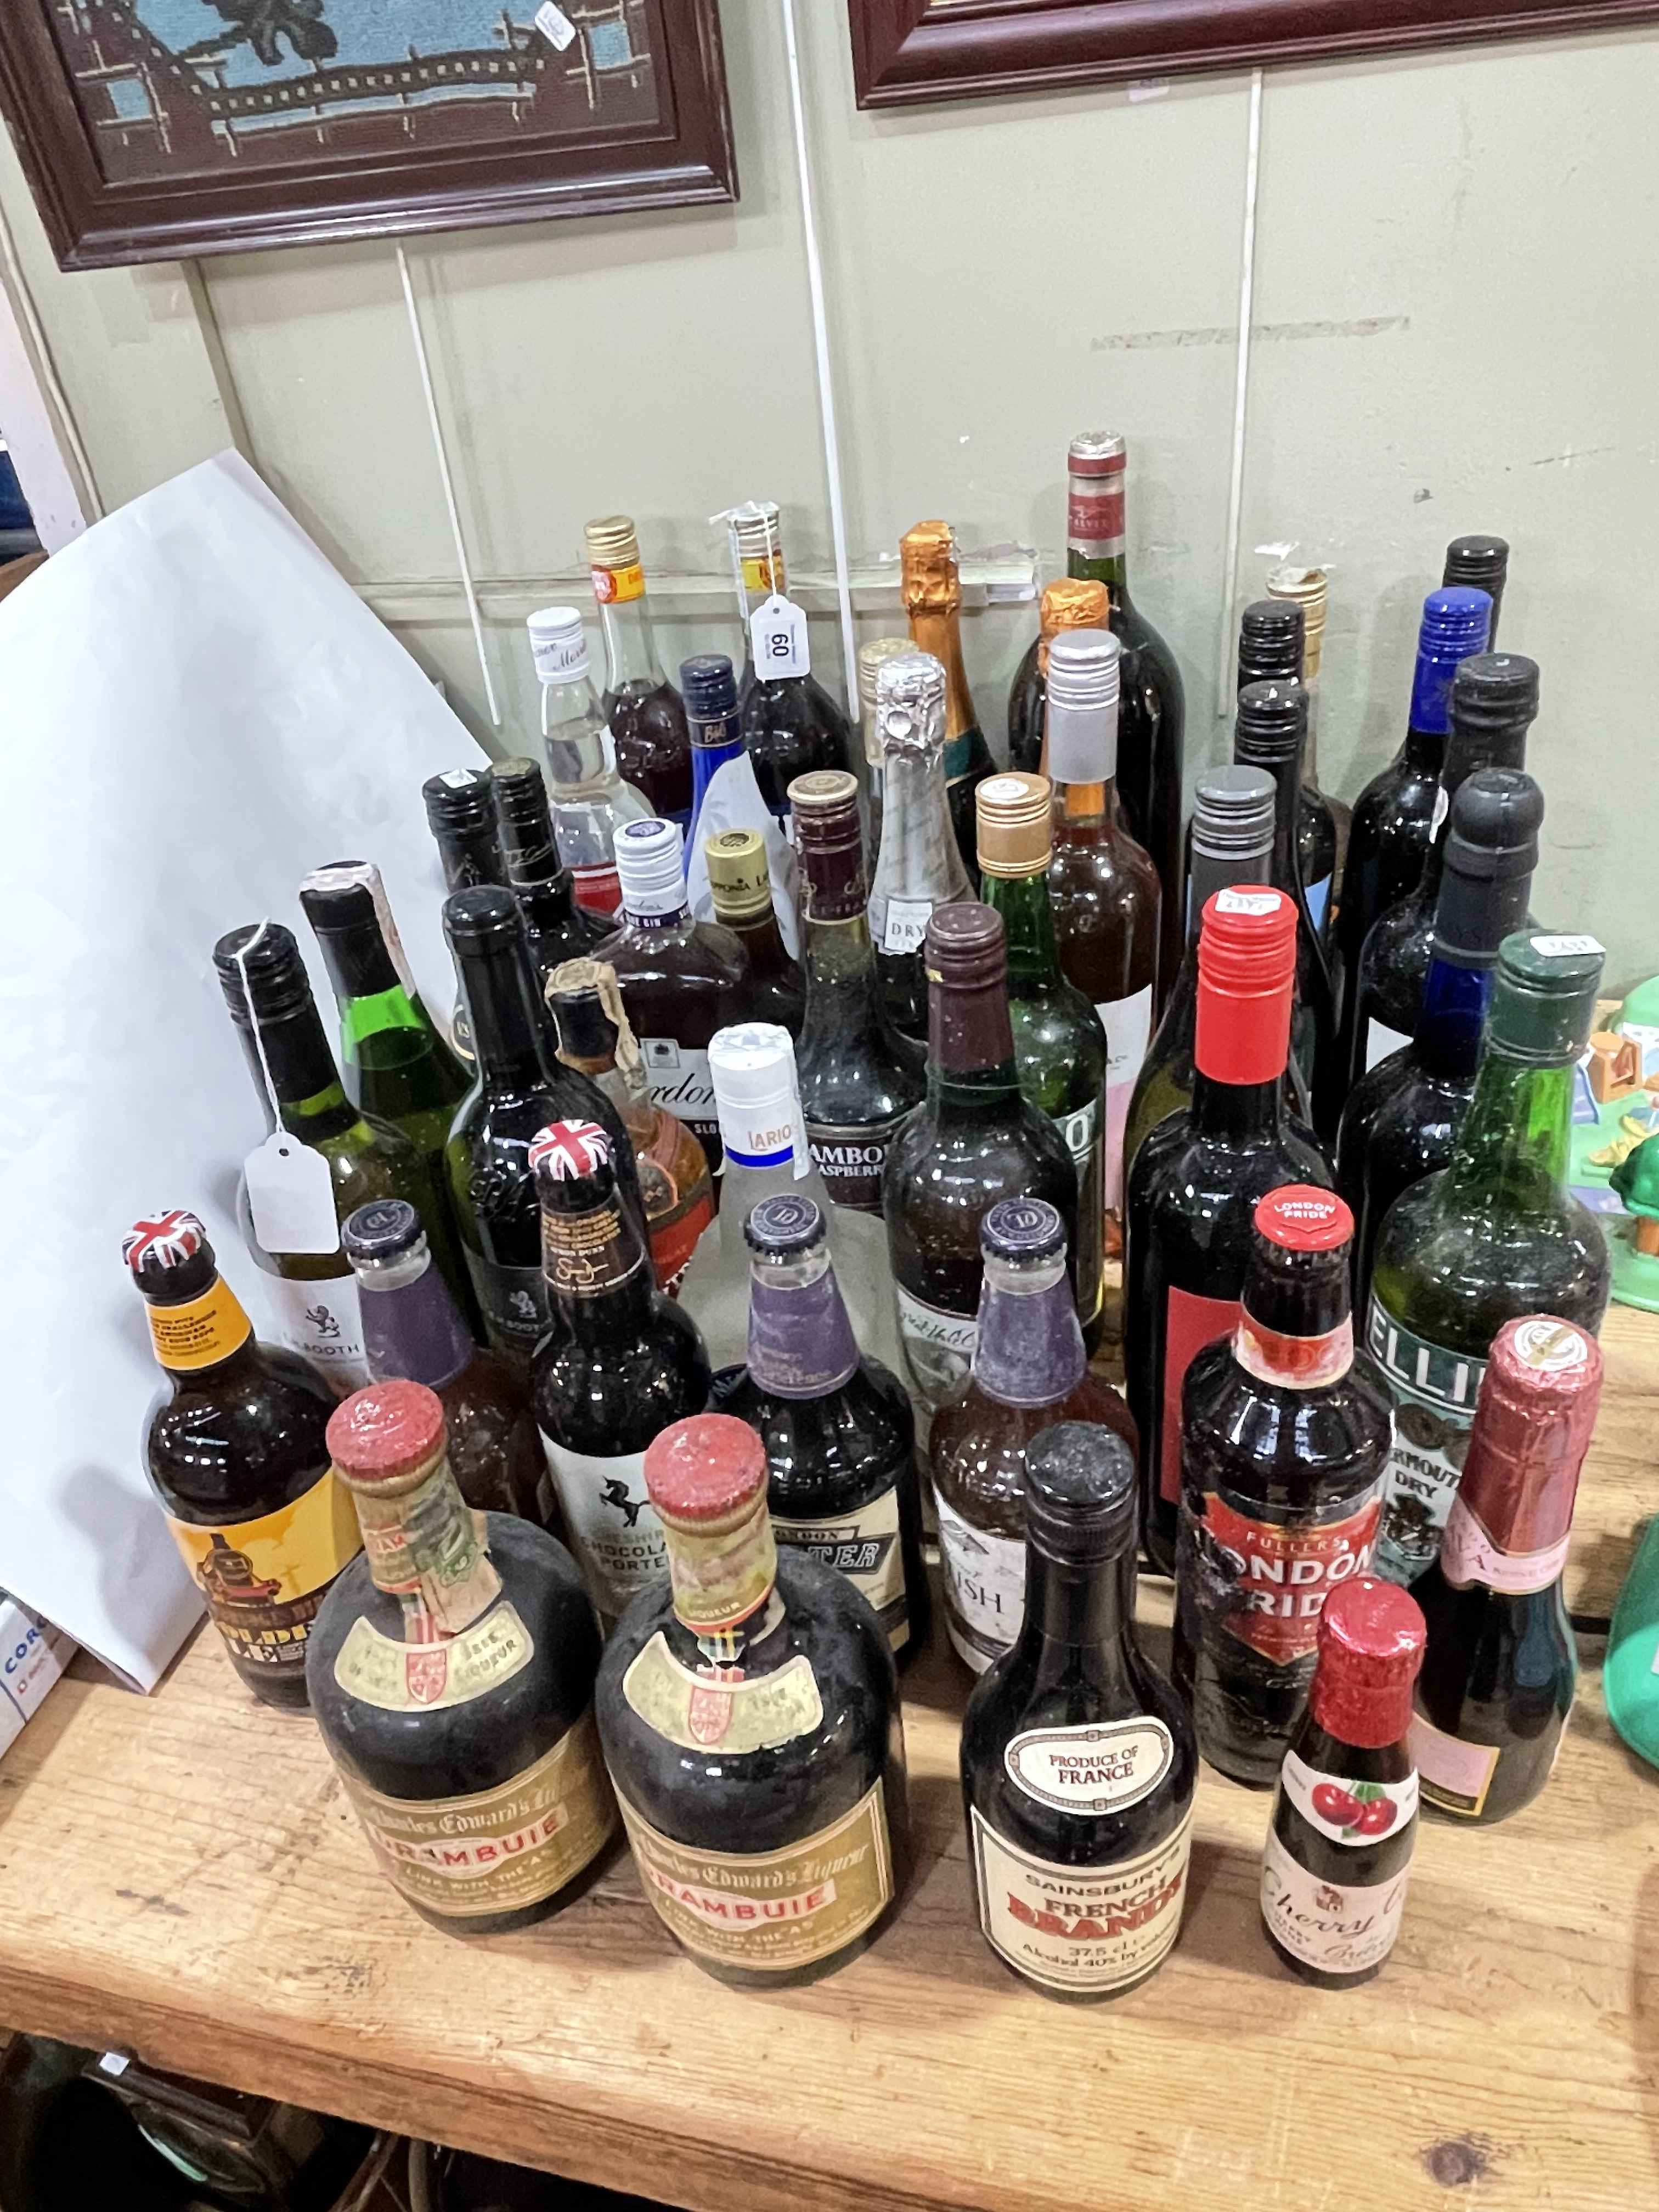 Collection of spirits, wine, beer etc including Campari, Gordon's Gin, Bergarac 2016,